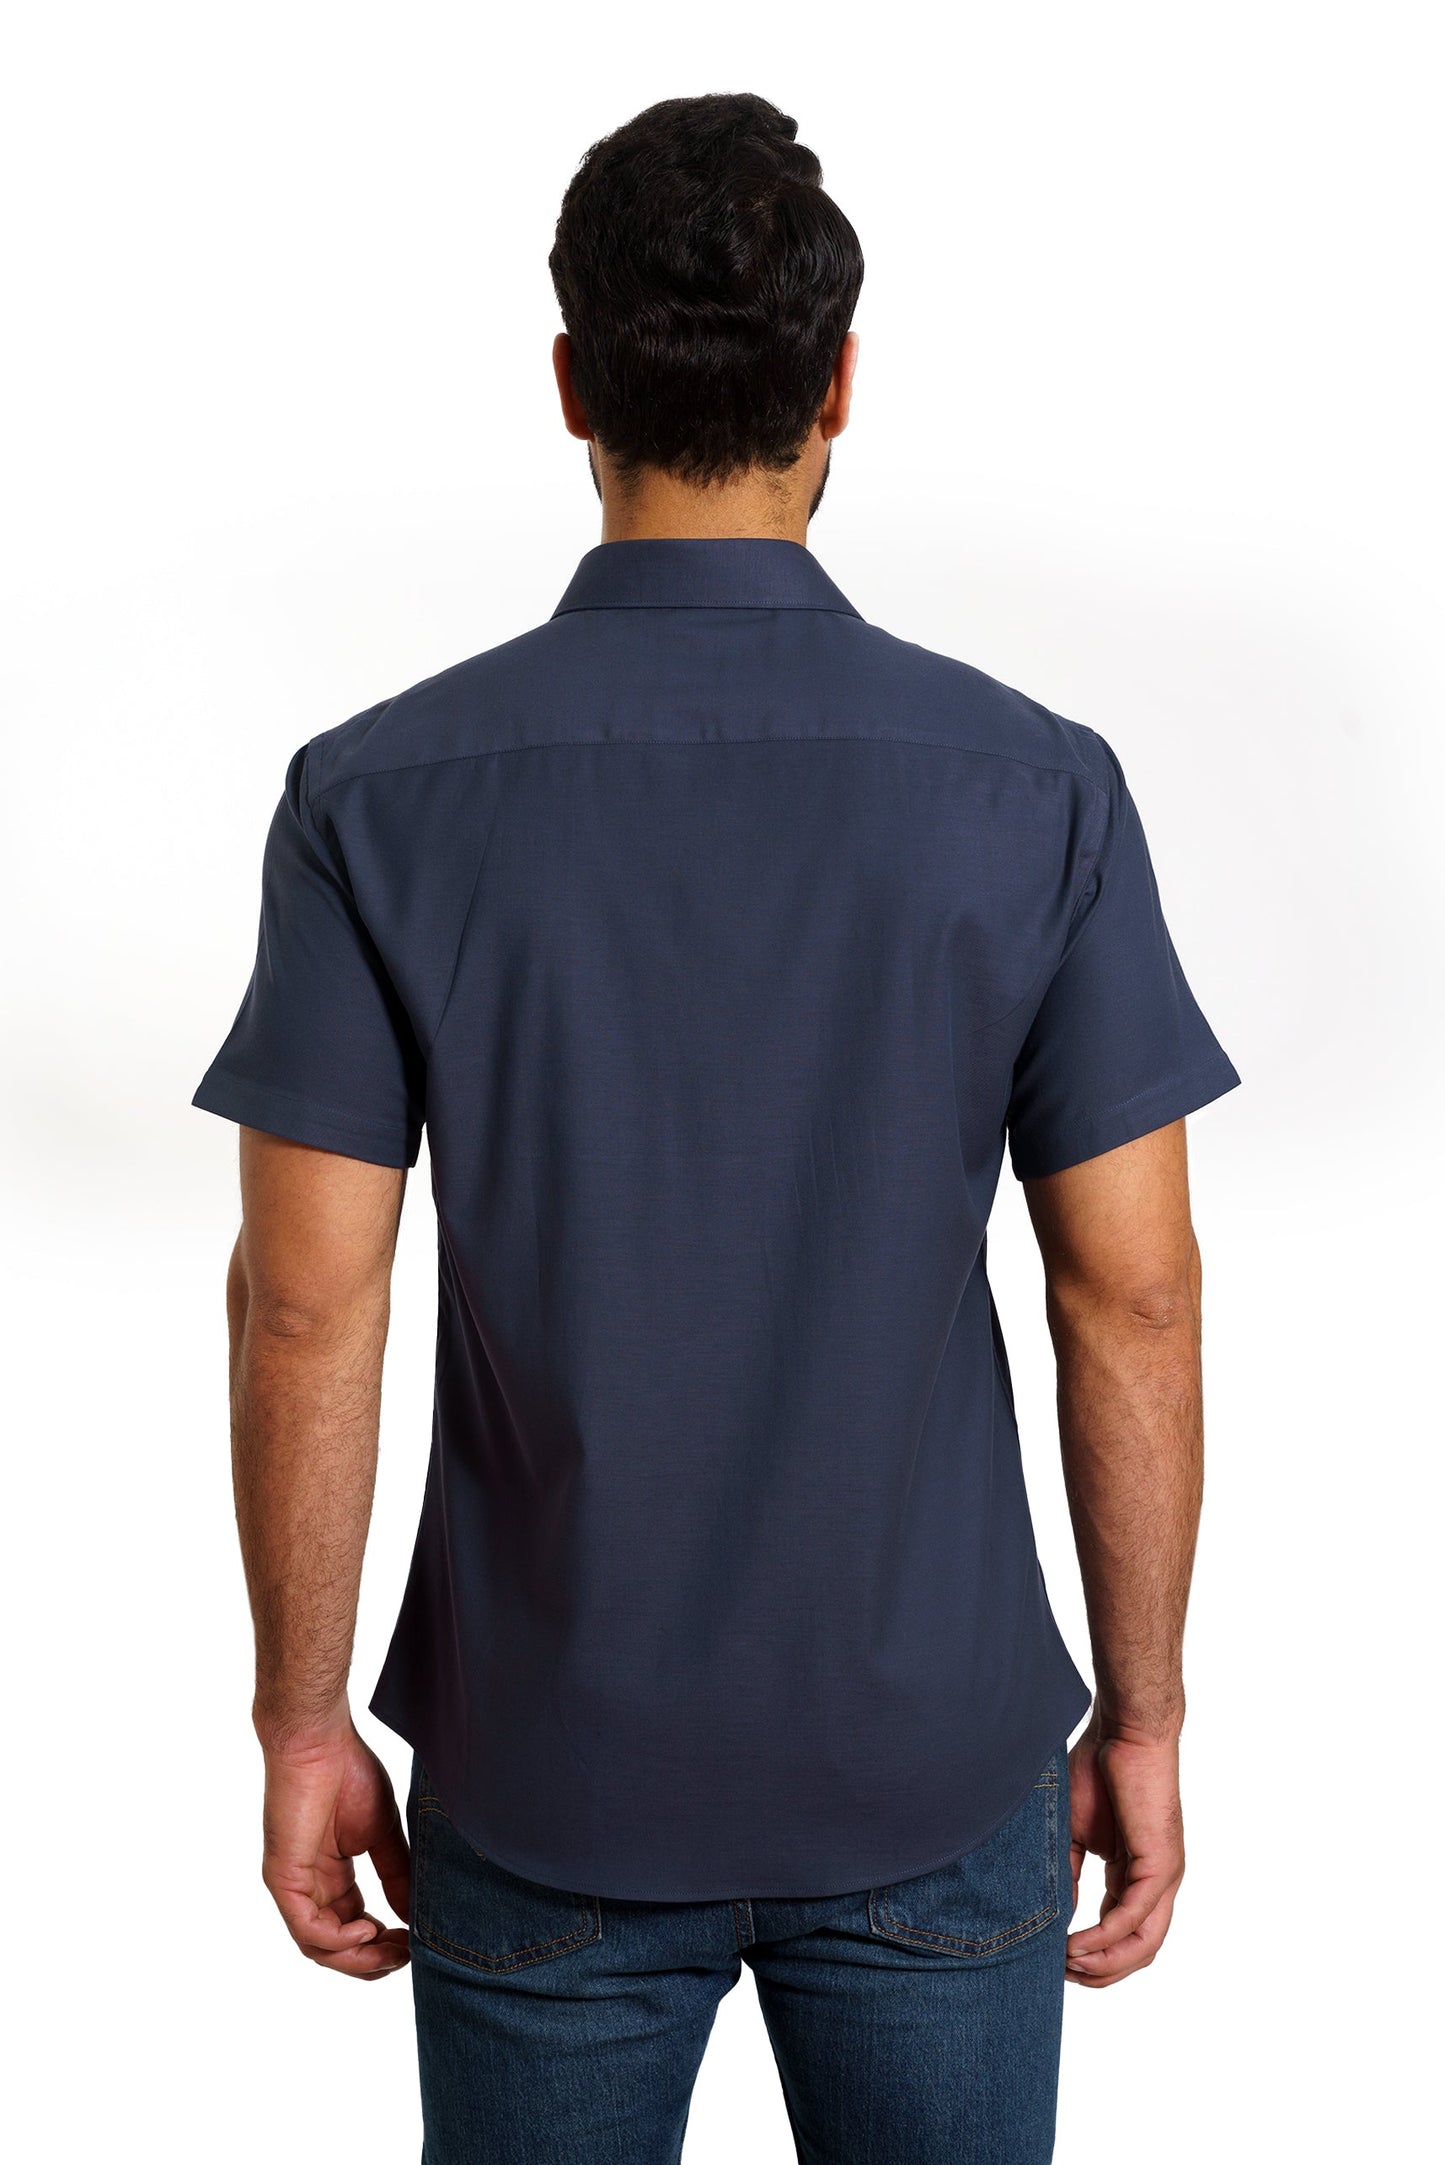 Navy Short Sleeve Shirt TH-2866SS Back